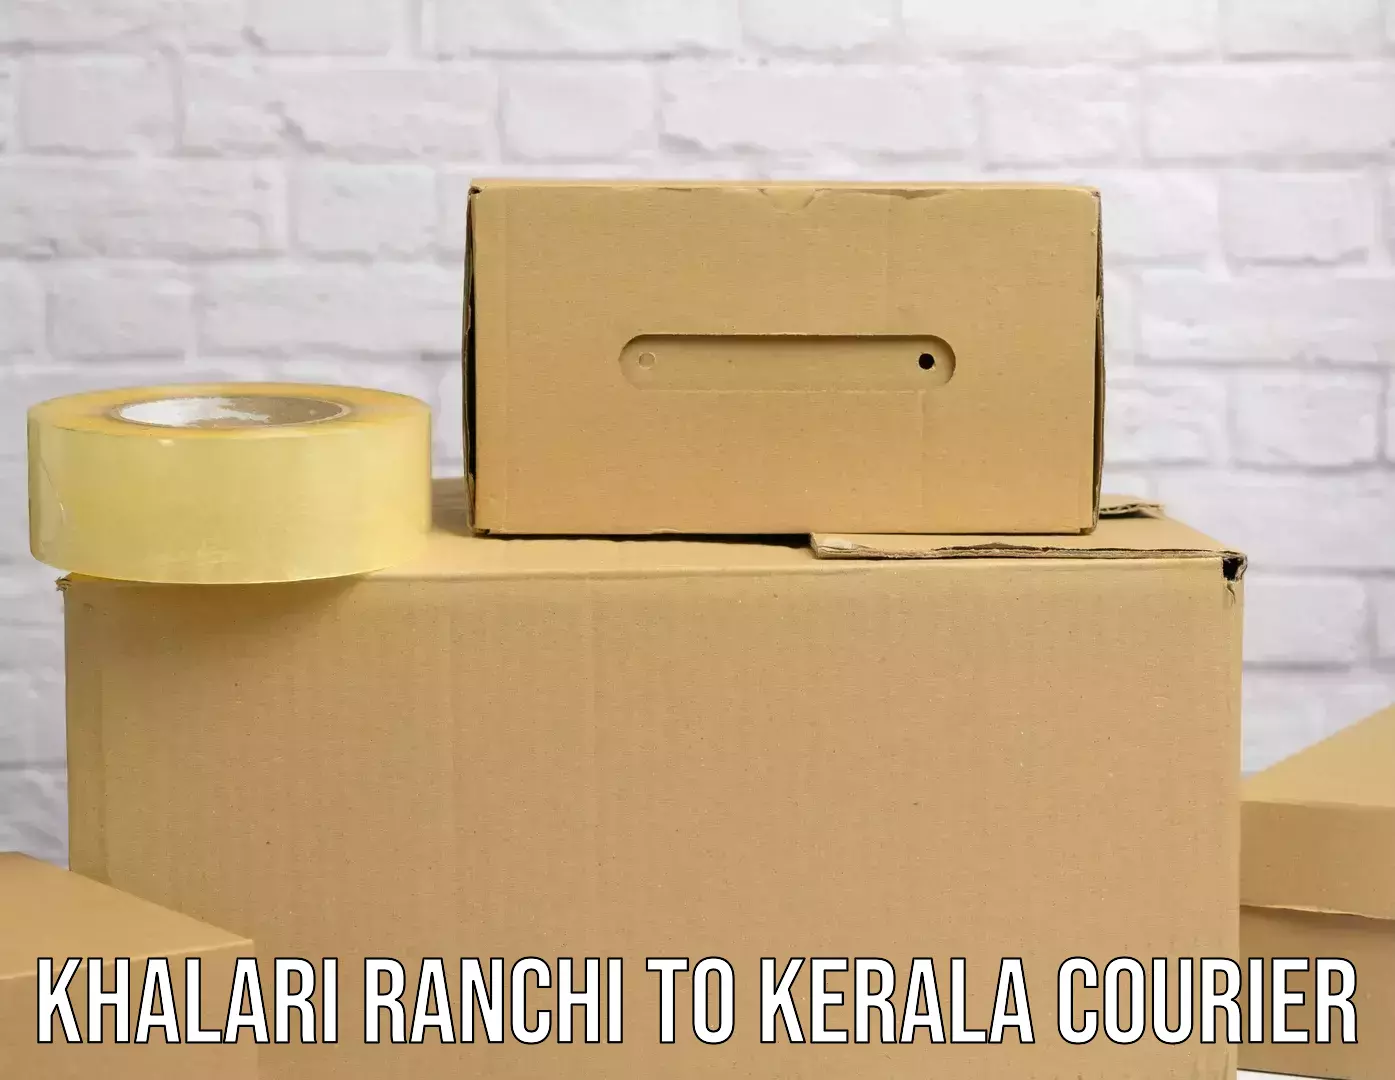 Delivery service partnership Khalari Ranchi to Vaikom